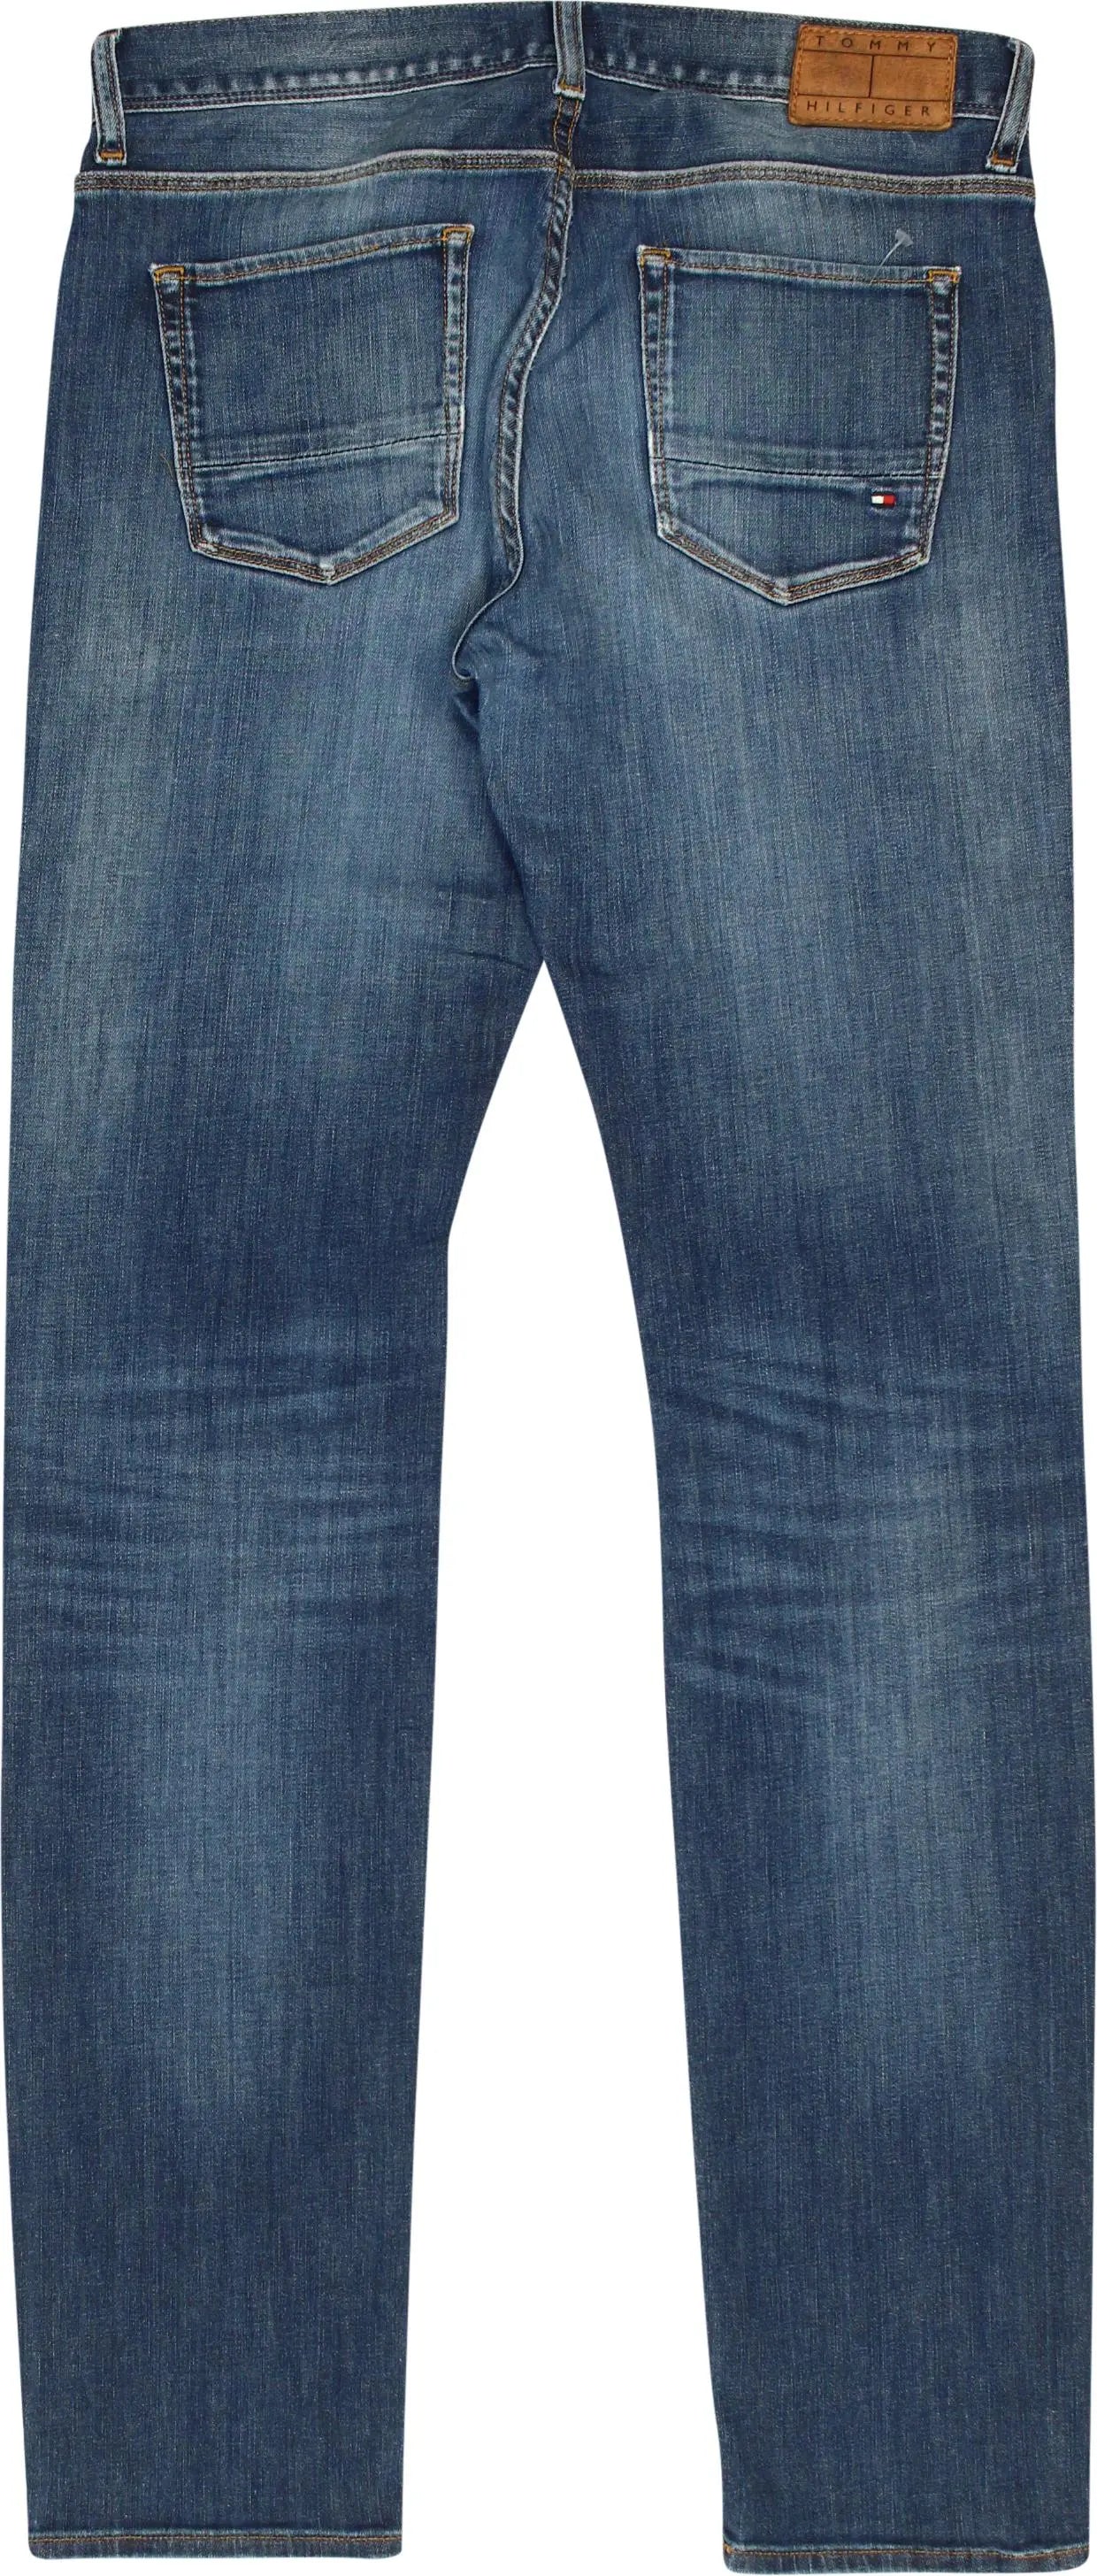 Tommy Hilfiger Denton Stretch Straight Fit Jeans